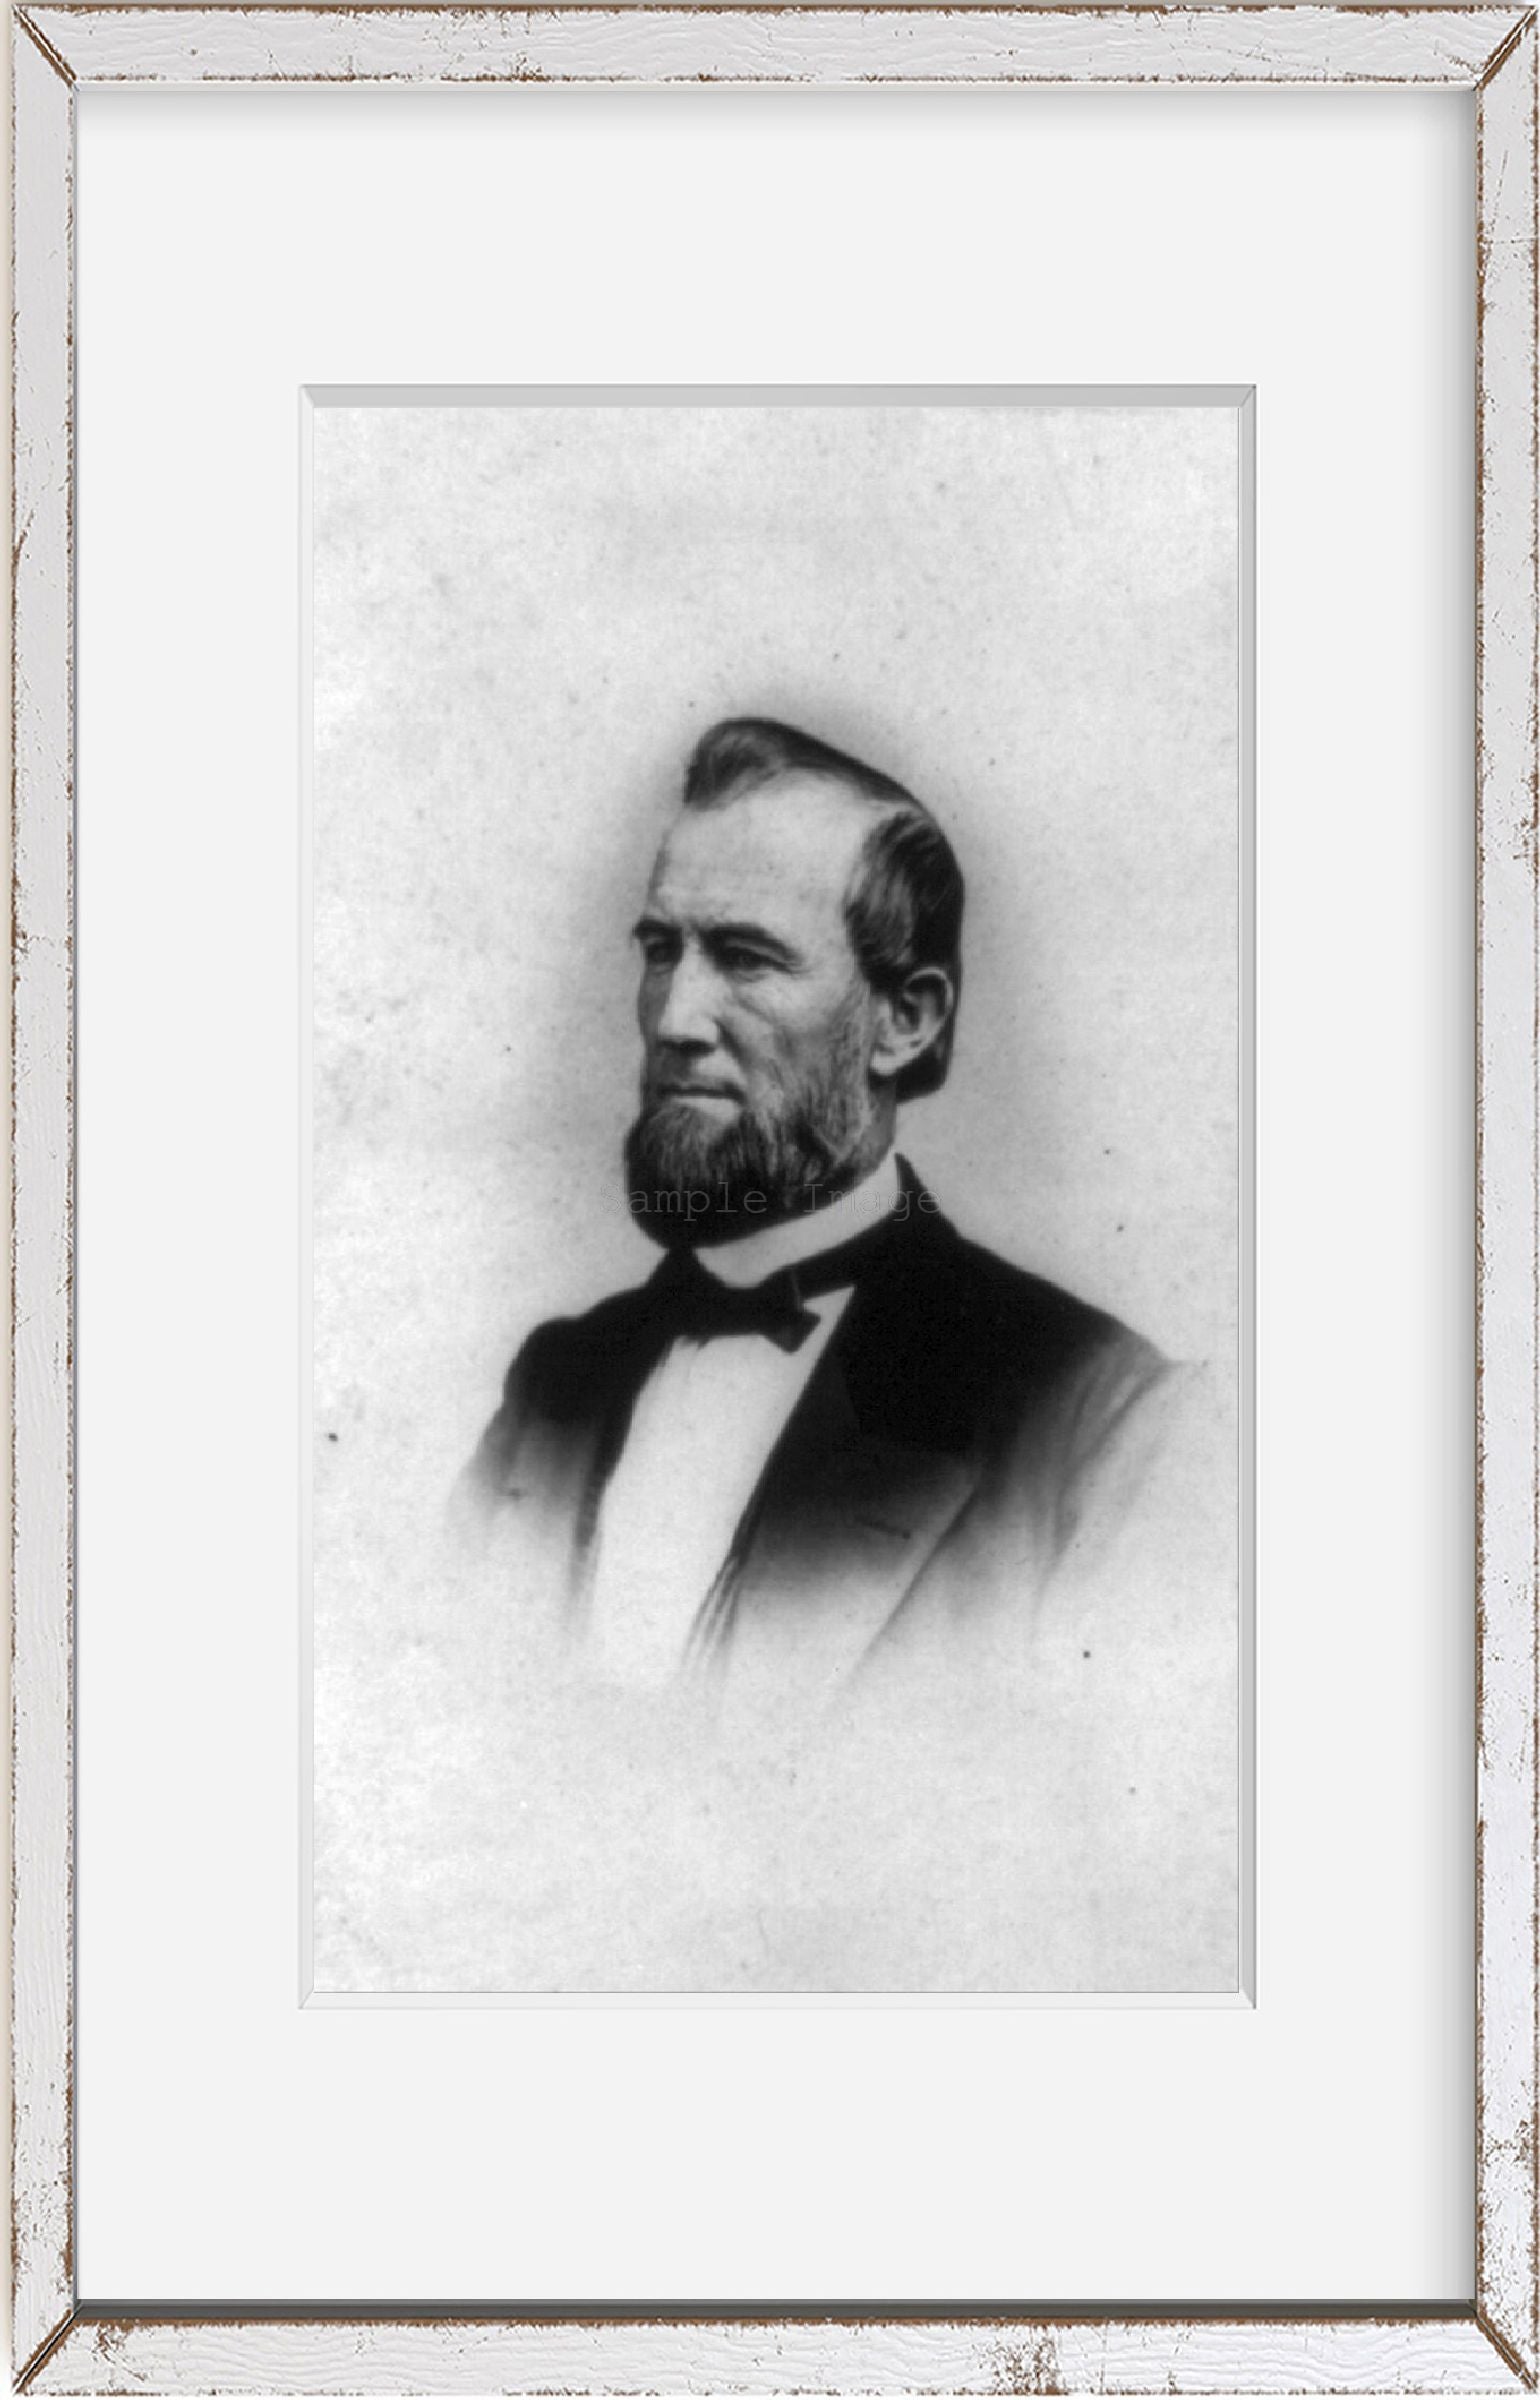 Photo: Captain James Buchanan Eads, 1820-1887, American civil engineer, inventor